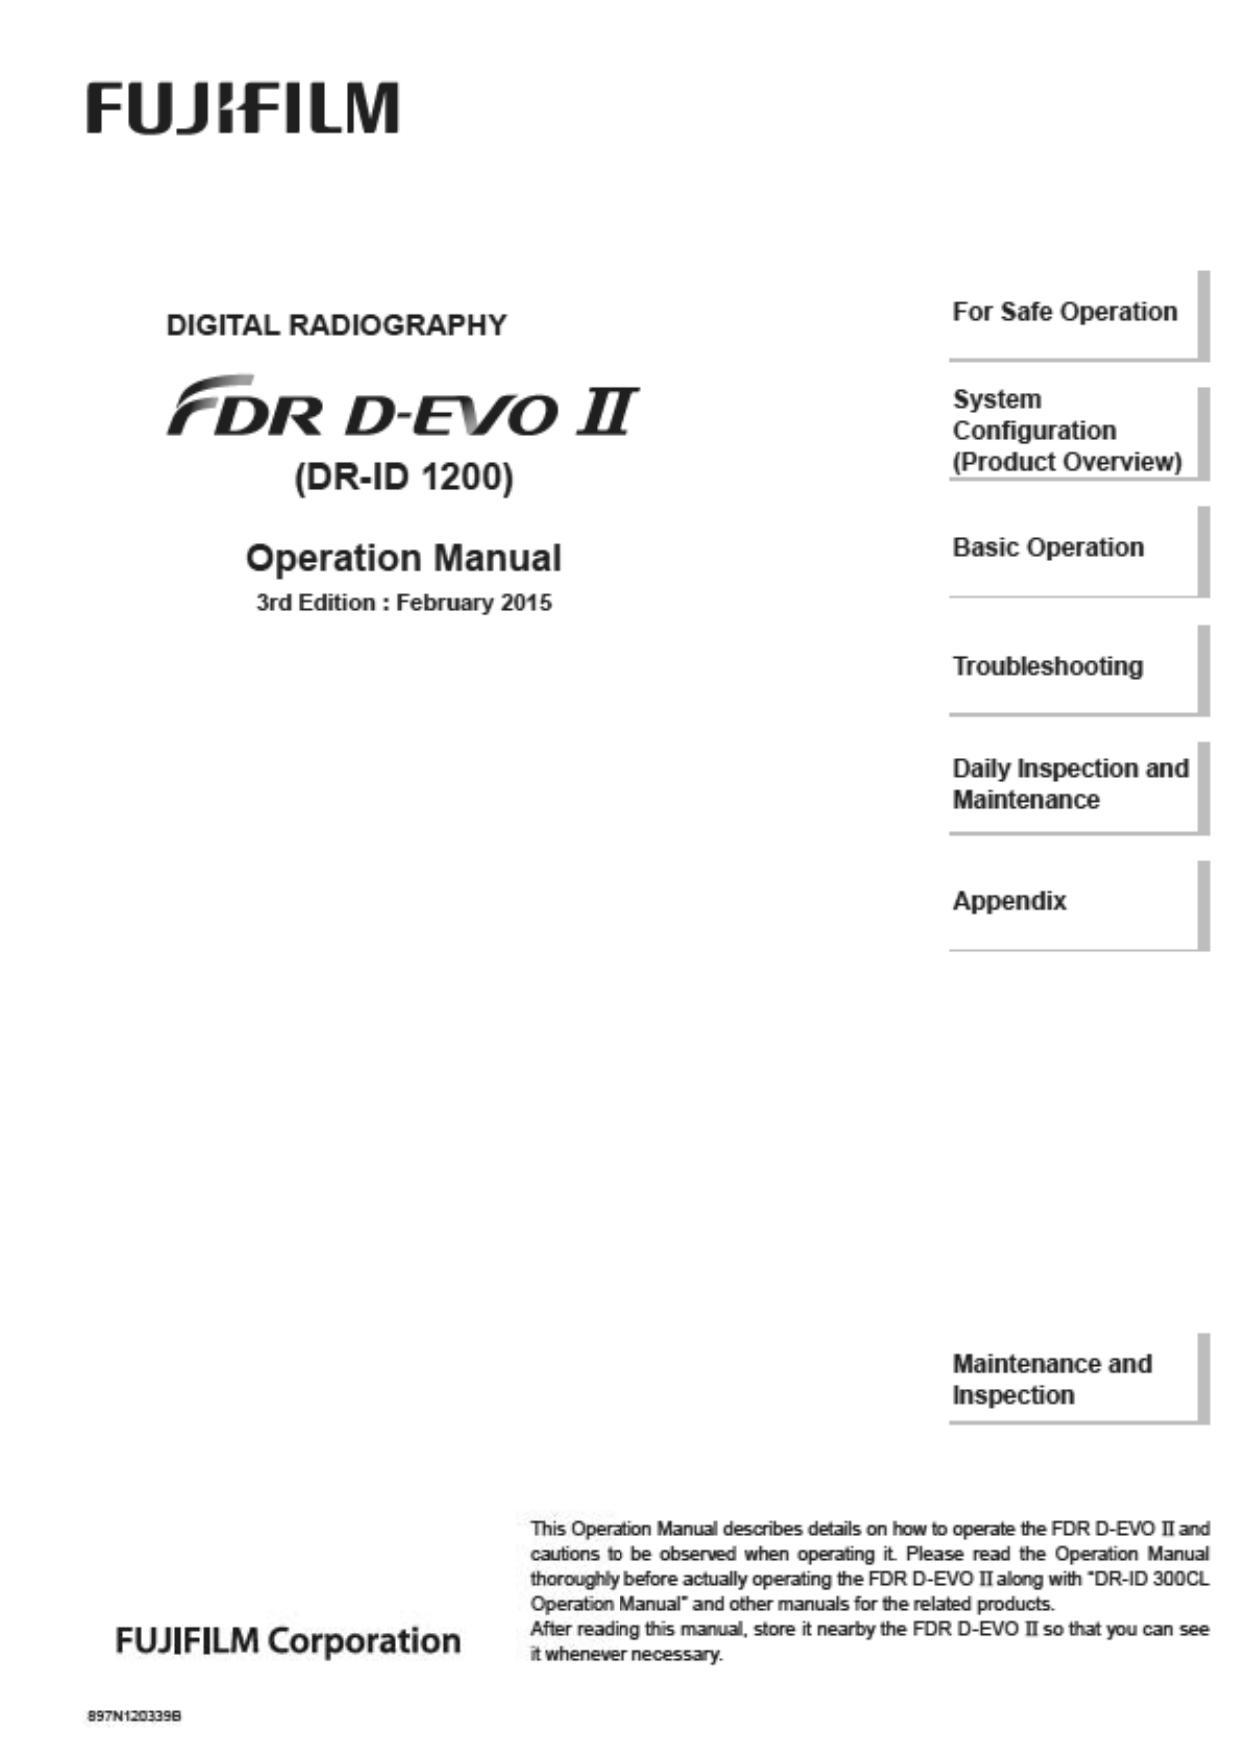 digital-radiography-fdr-d-evo-i-dr-id-1200-operation-manual-3rd-edition.pdf